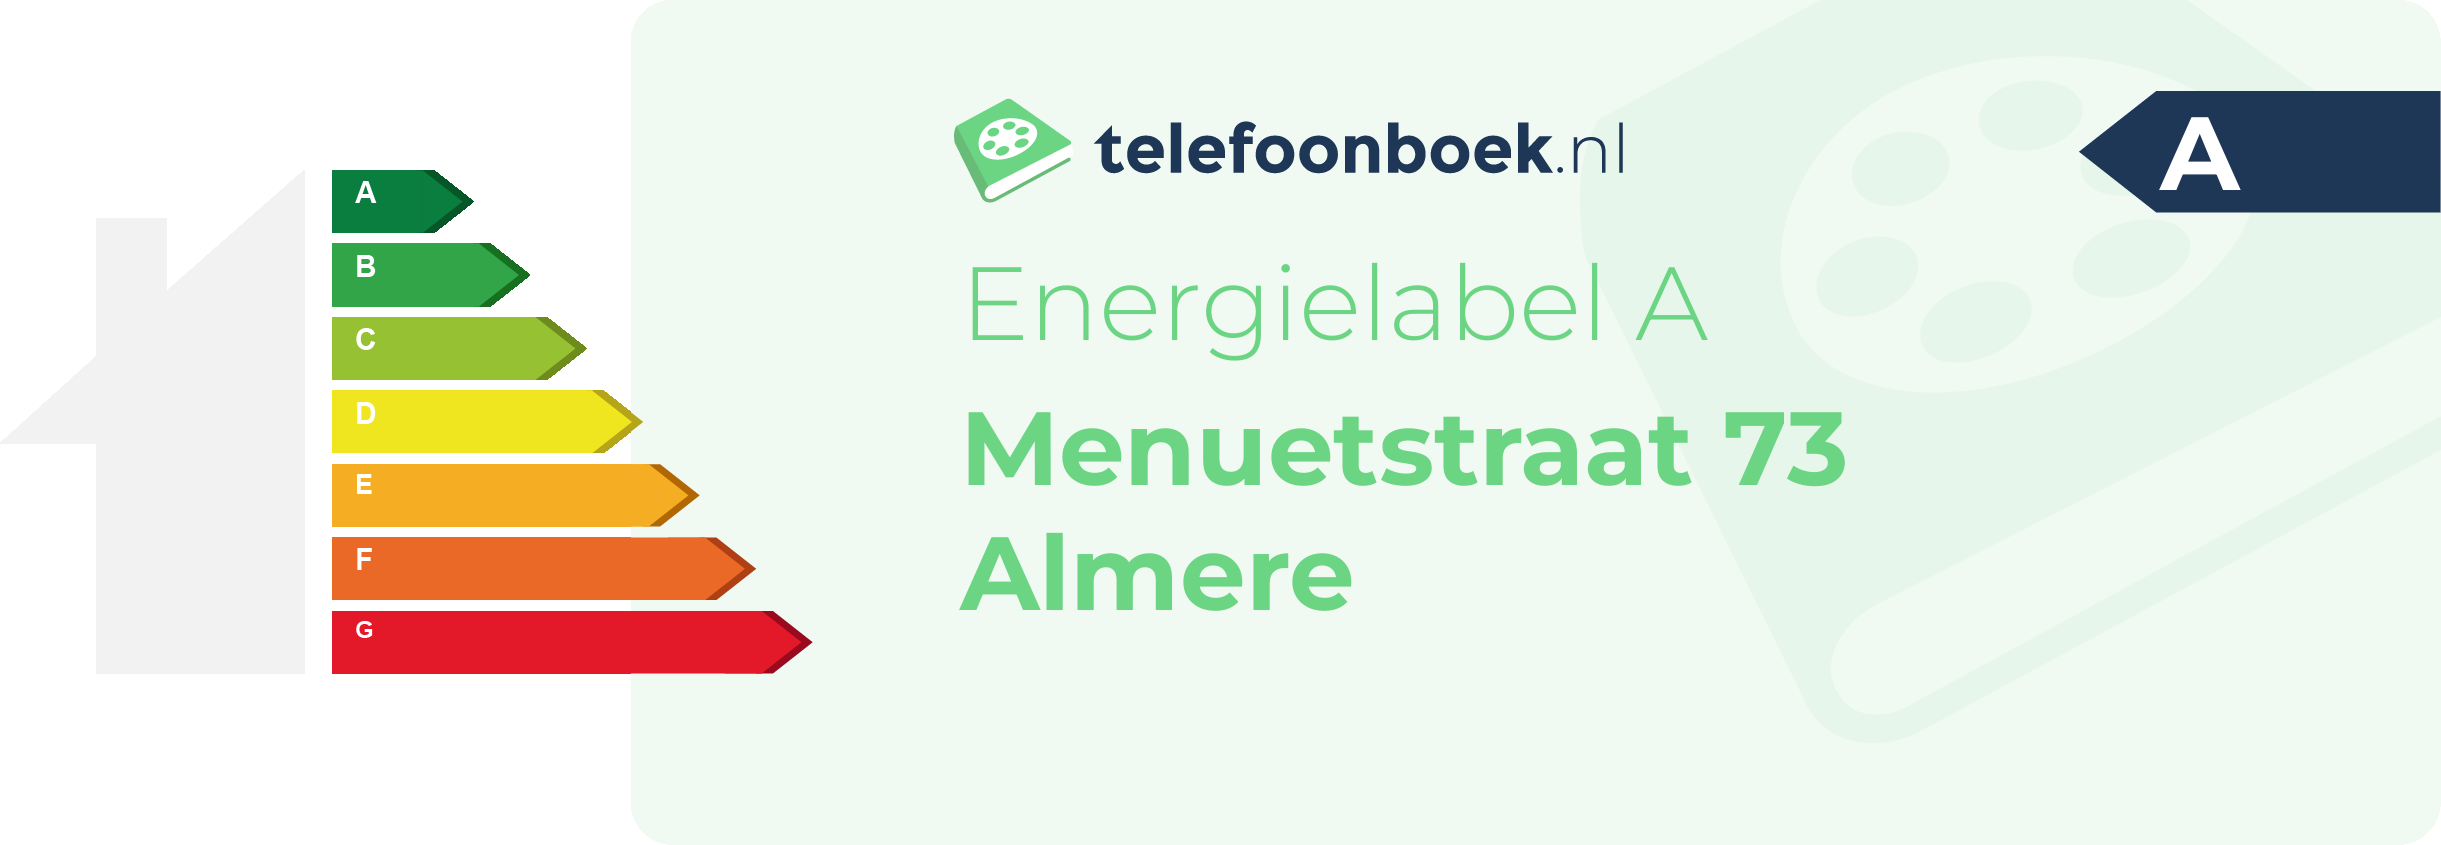 Energielabel Menuetstraat 73 Almere